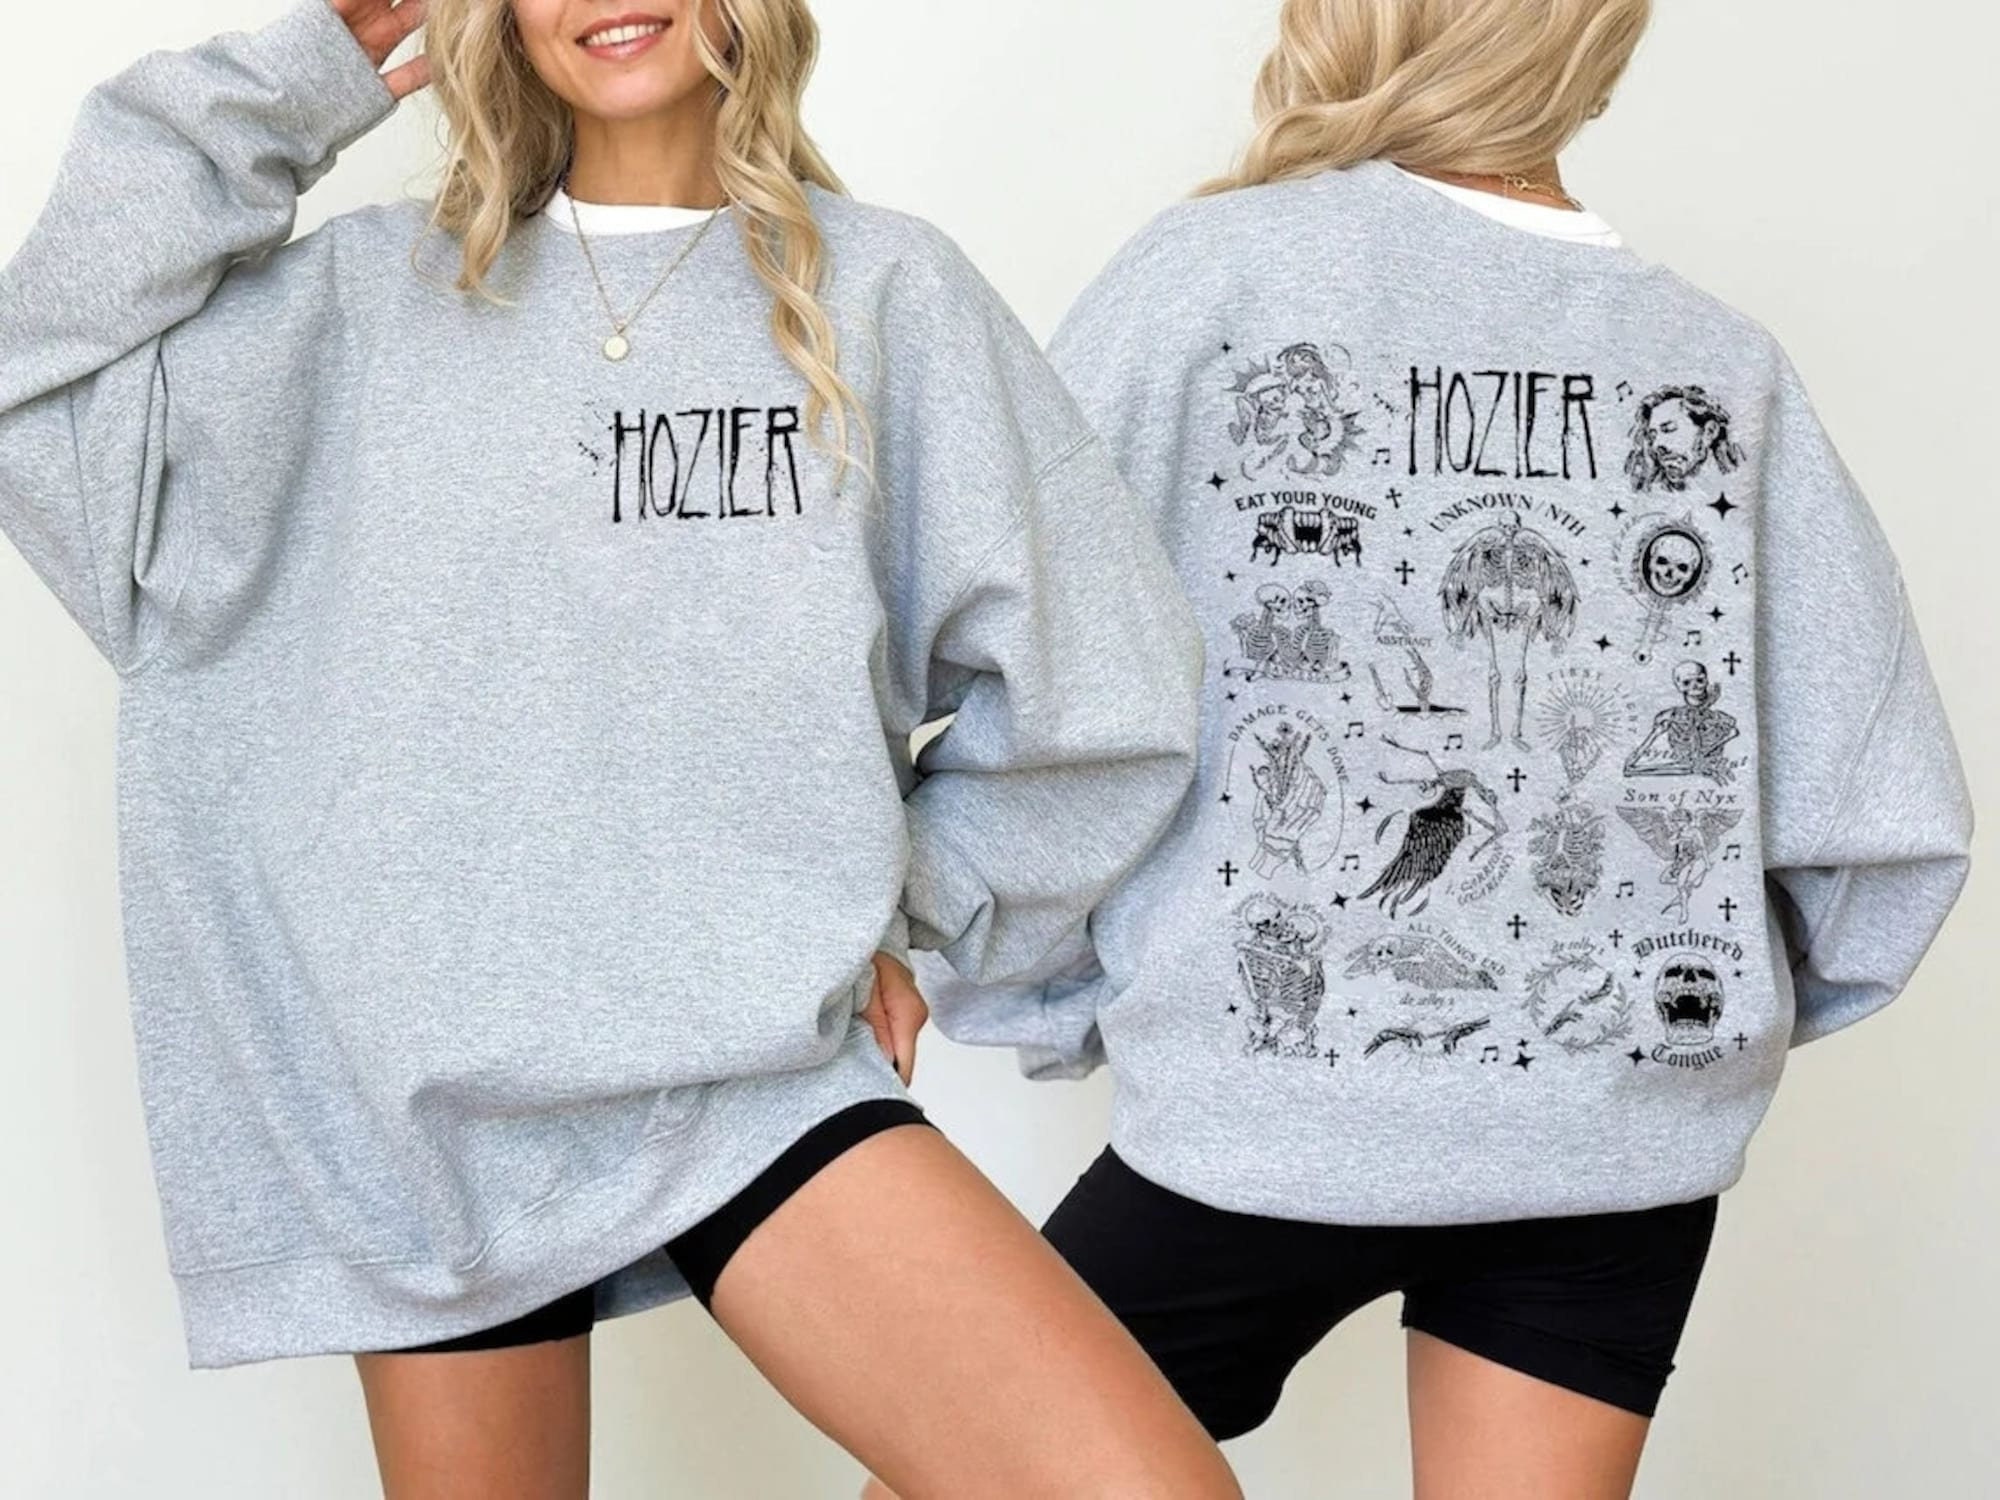 Unreal Unearth Tour Sweatshirt, Hozier Tour Sweatshirt, Hozier Vintage